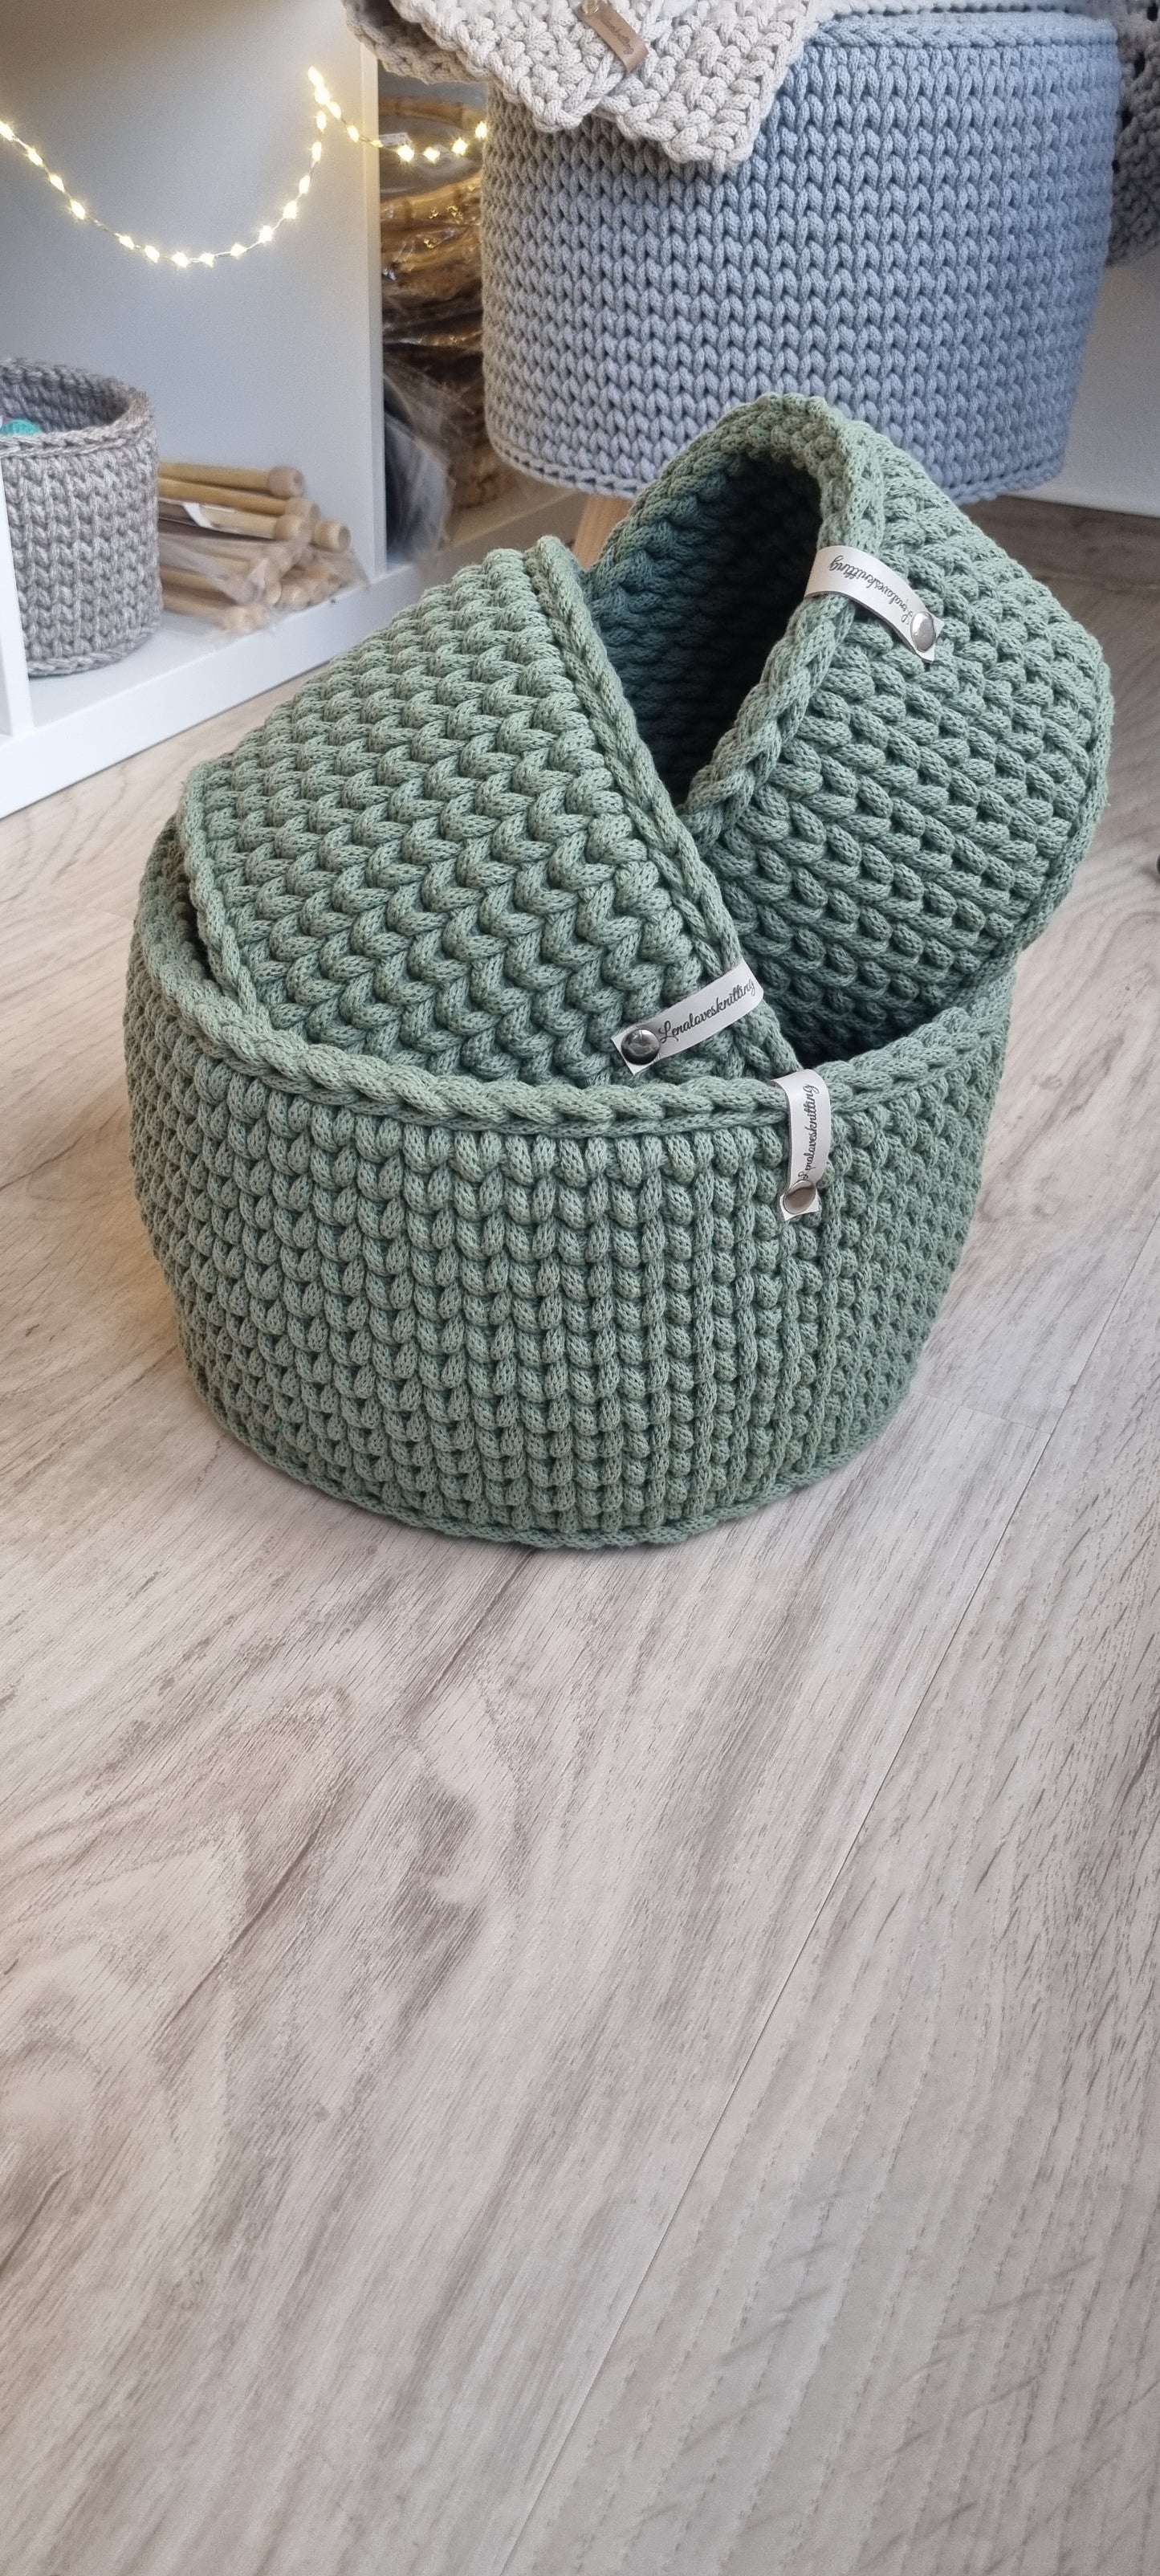 Set of 3 Baskets Basket Storage Basket Utensilos Utensilo Crochet Basket Crocheted Gift Idea Baby Shower